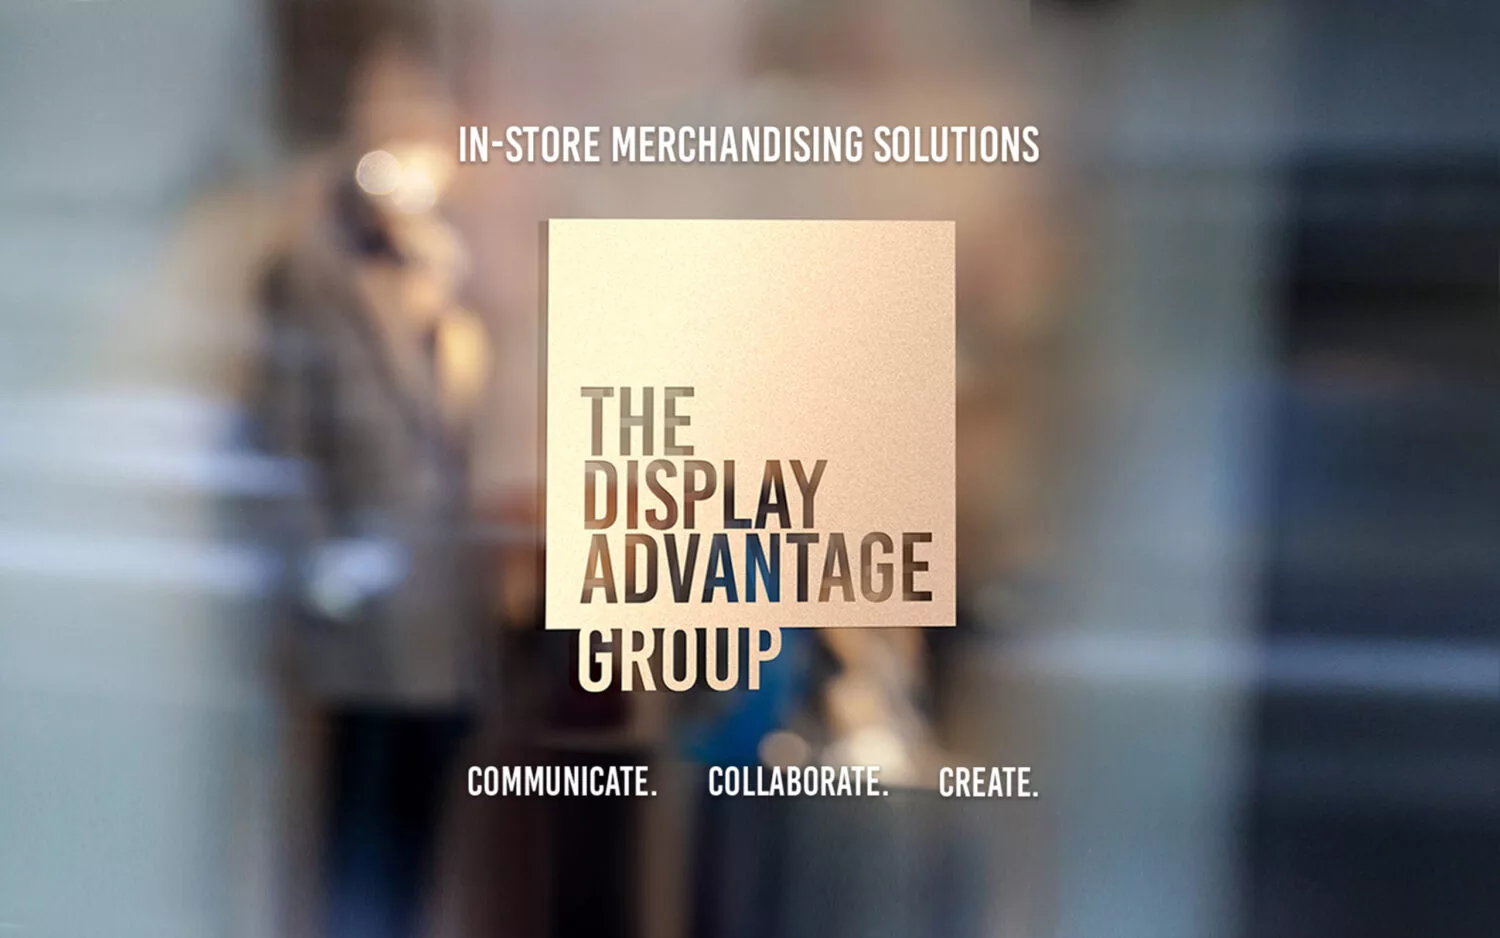 The Display Advantage Group